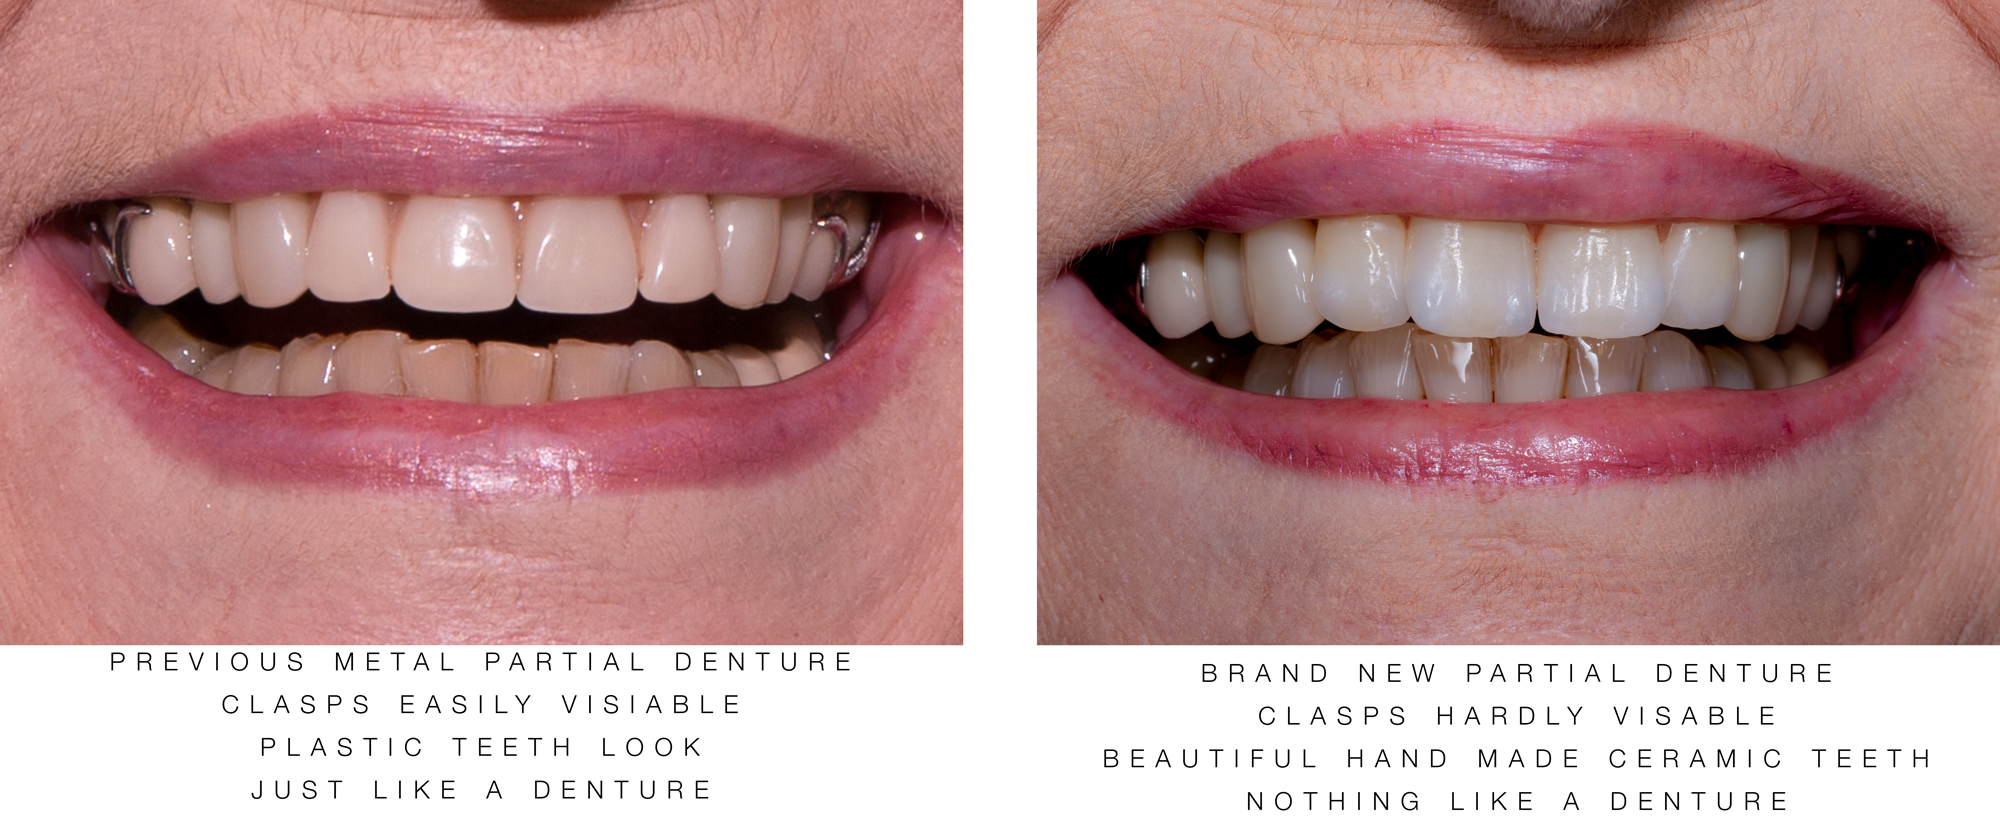 New-Partial-Denture by Ron Winter of Fabulous Teeth @ Seaside Dental Laboratory & Clinic.jpg